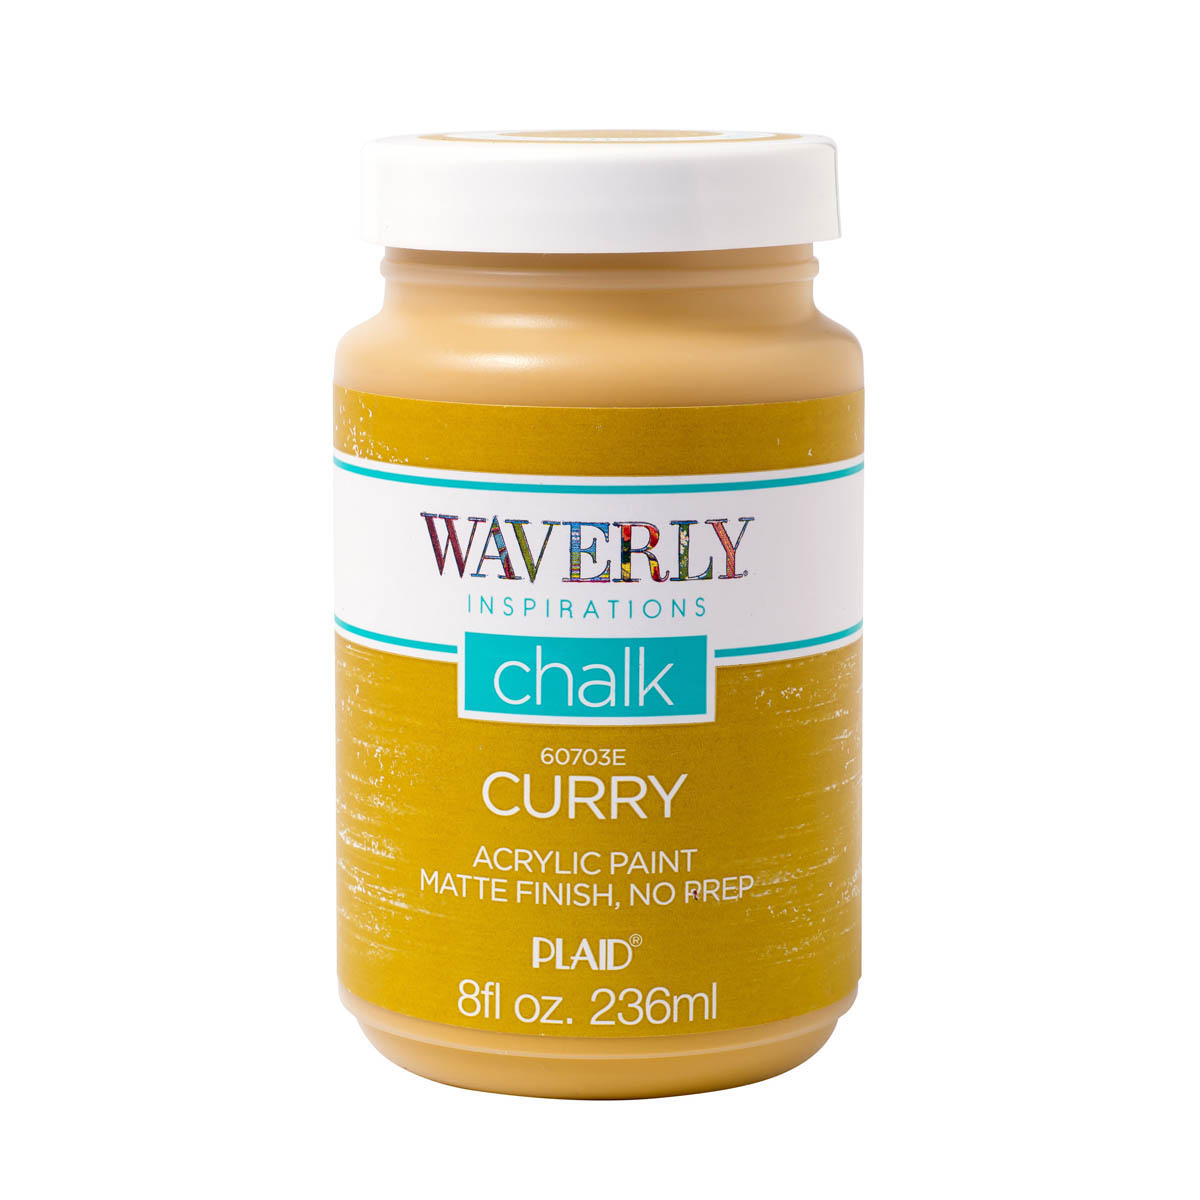 Waverly ® Inspirations Chalk Acrylic Paint - Curry, 8 oz. - 60703E